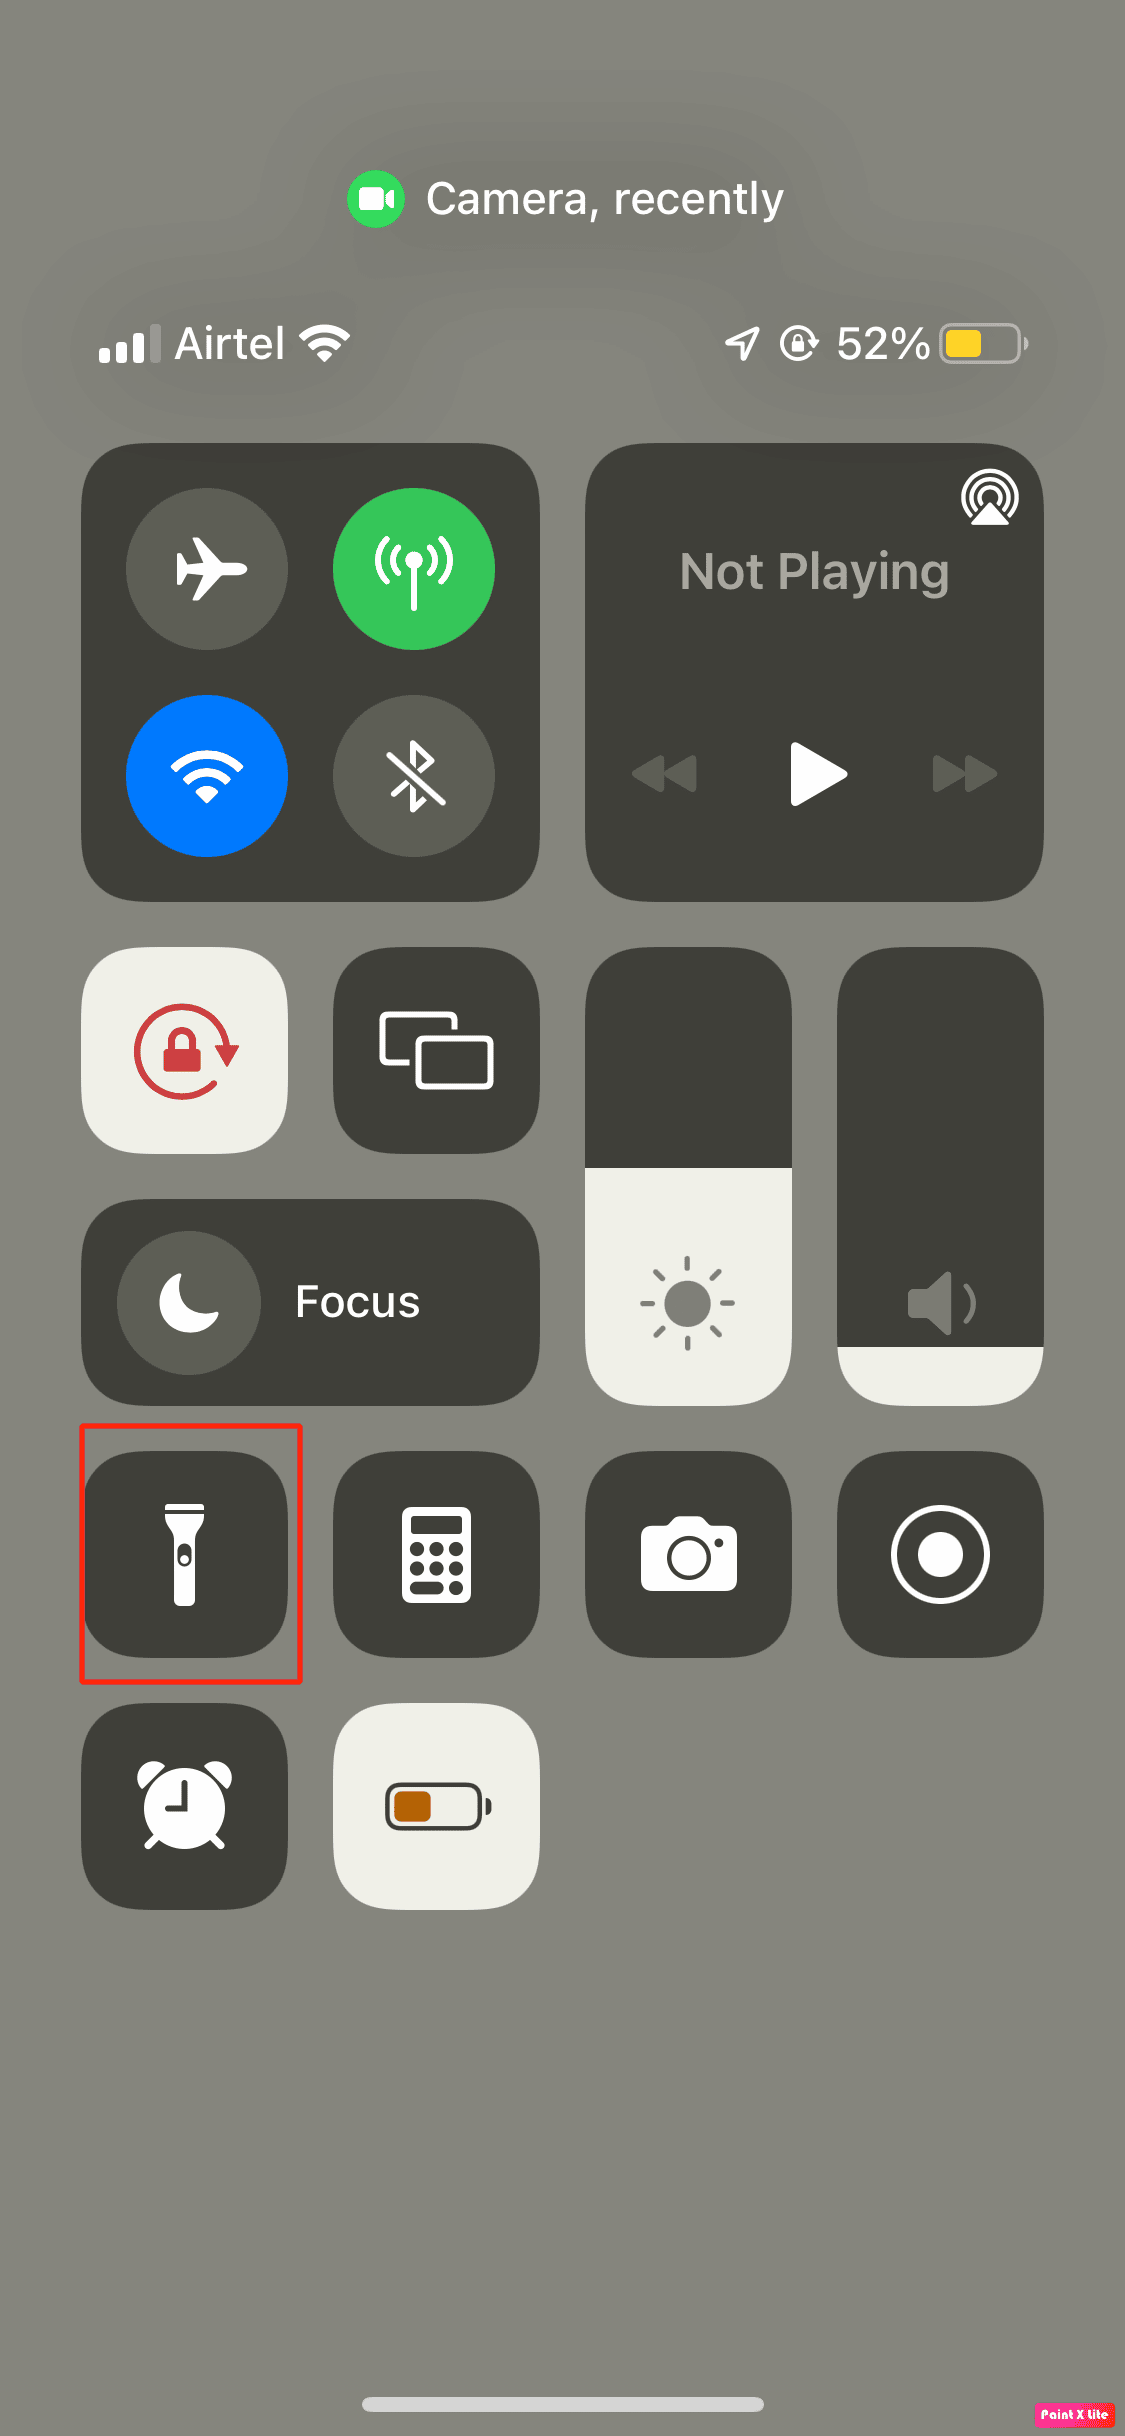 tap on flashlight icon